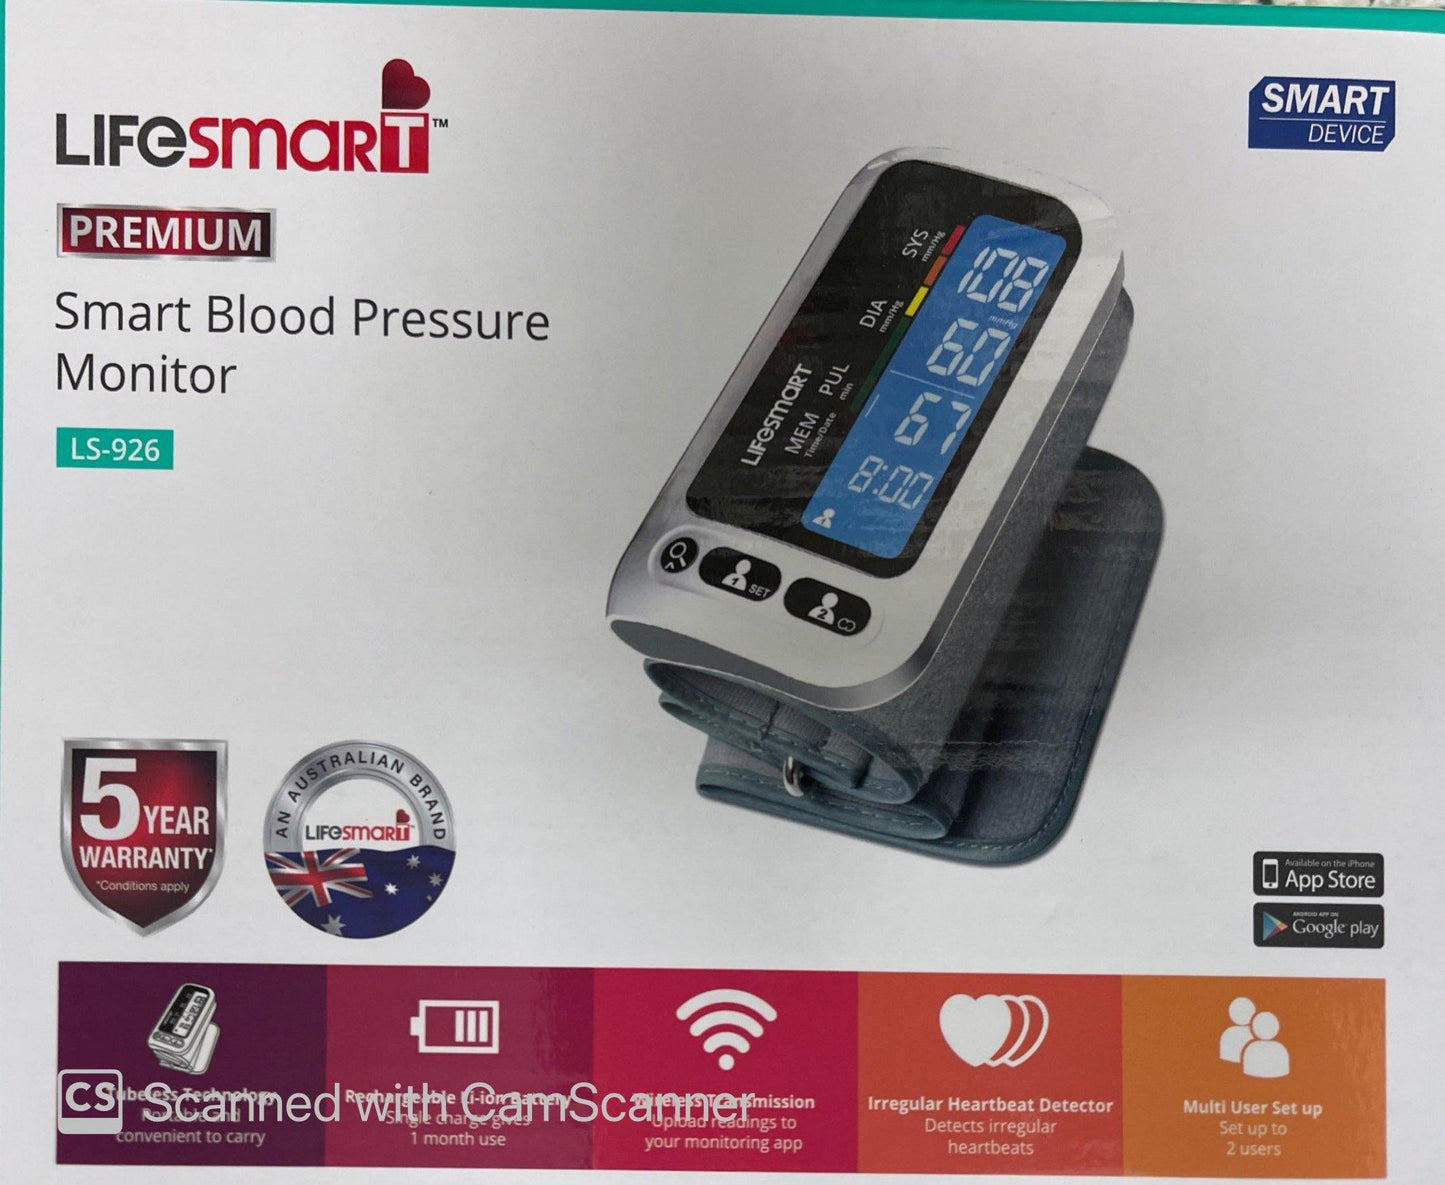 Lifesmart smart blood pressure monitor